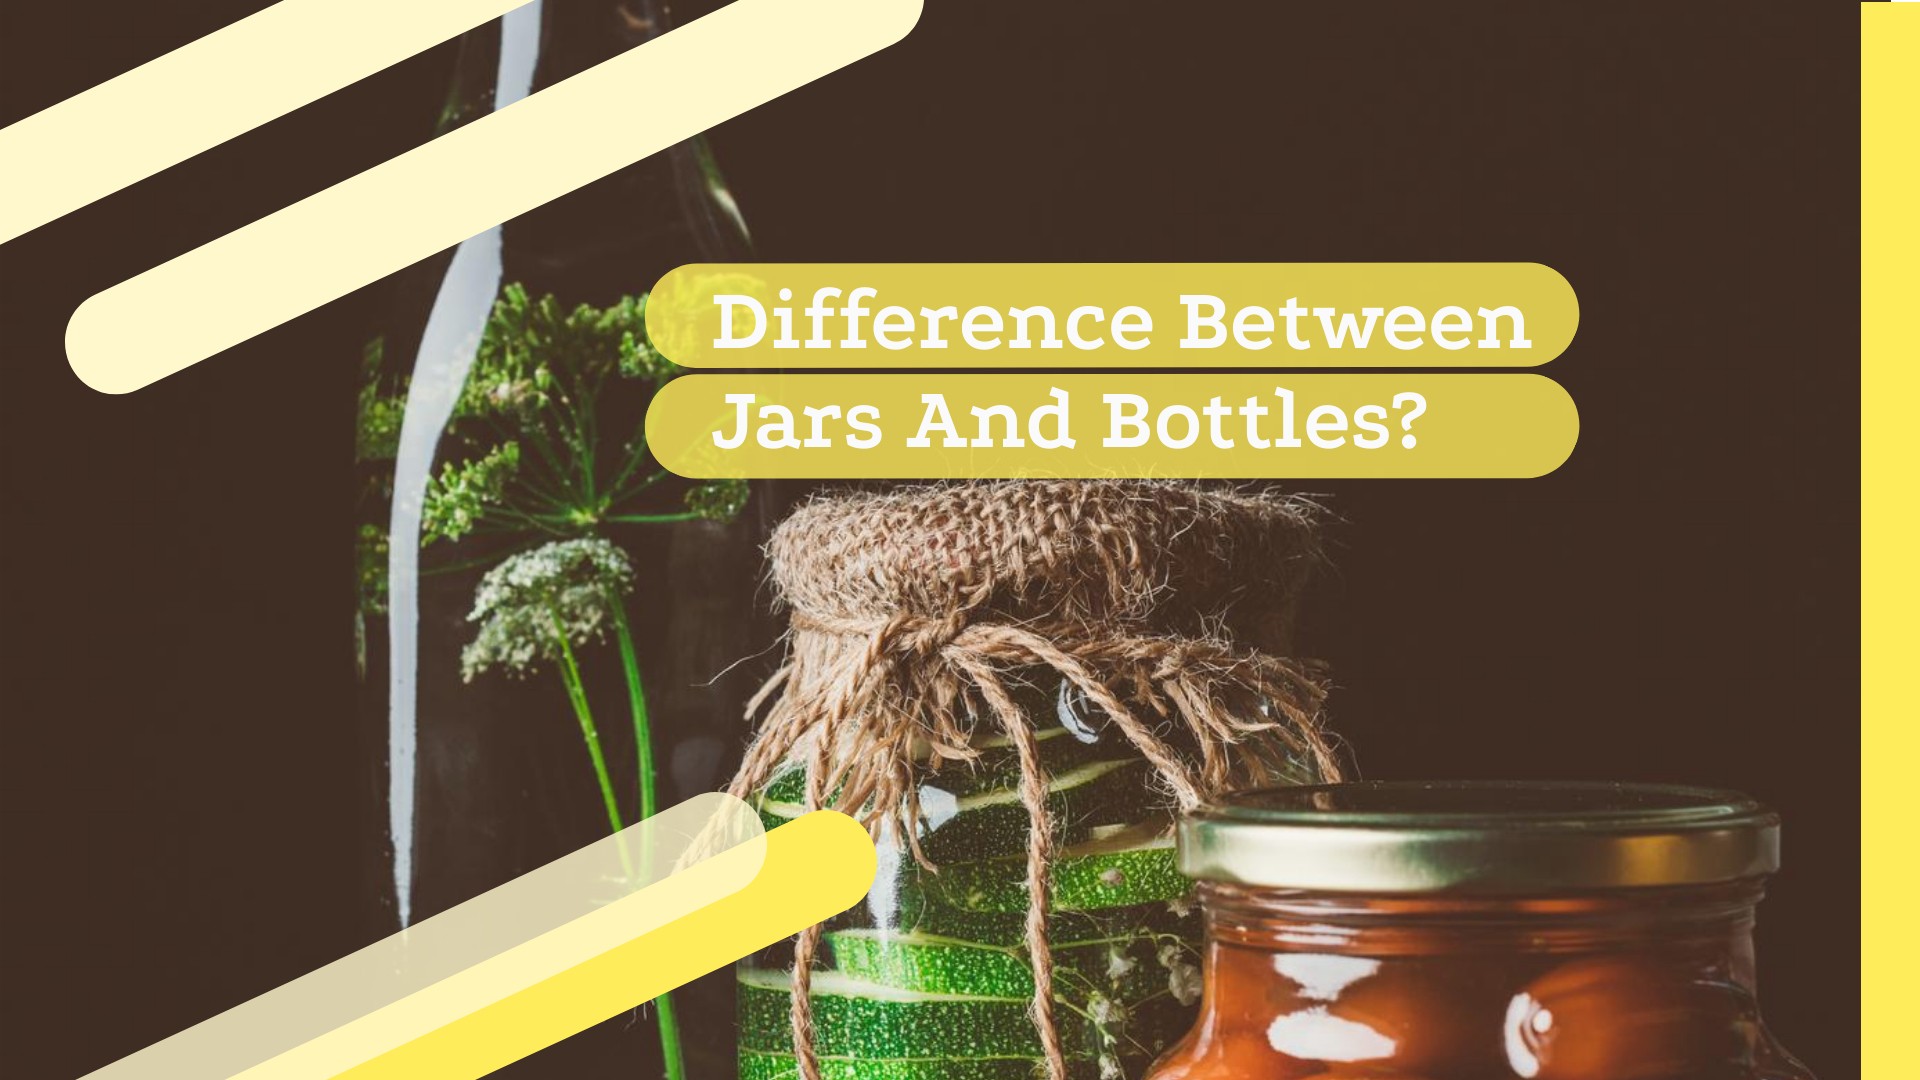 Jars And Bottles?